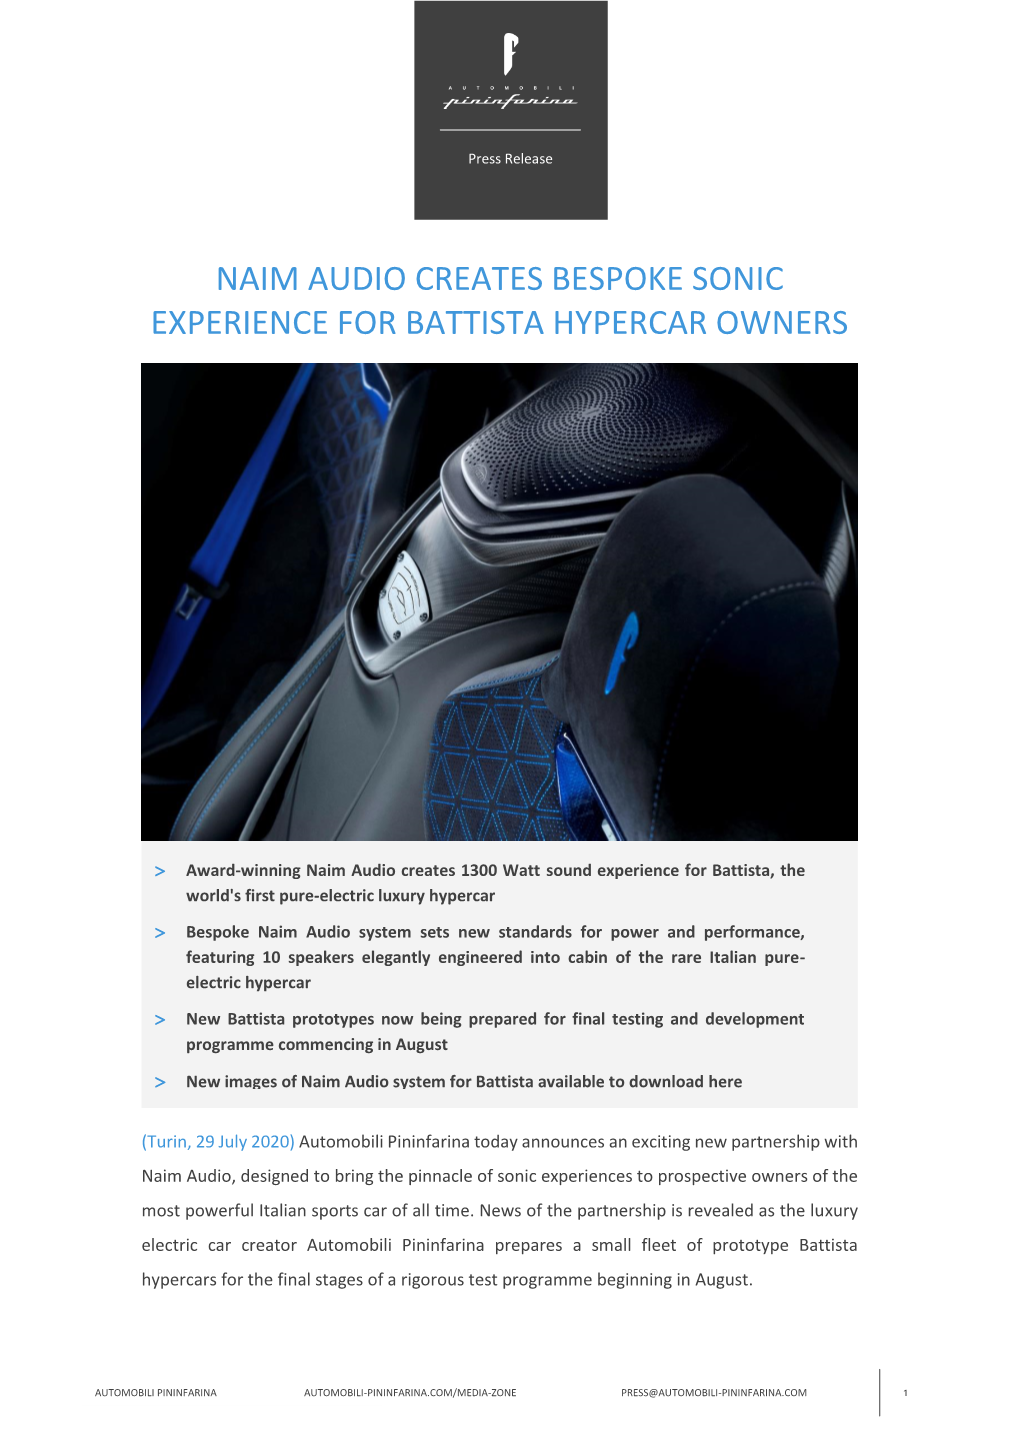 Naim Audio Creates Bespoke Sonic Experience for Battista Hypercar Owners